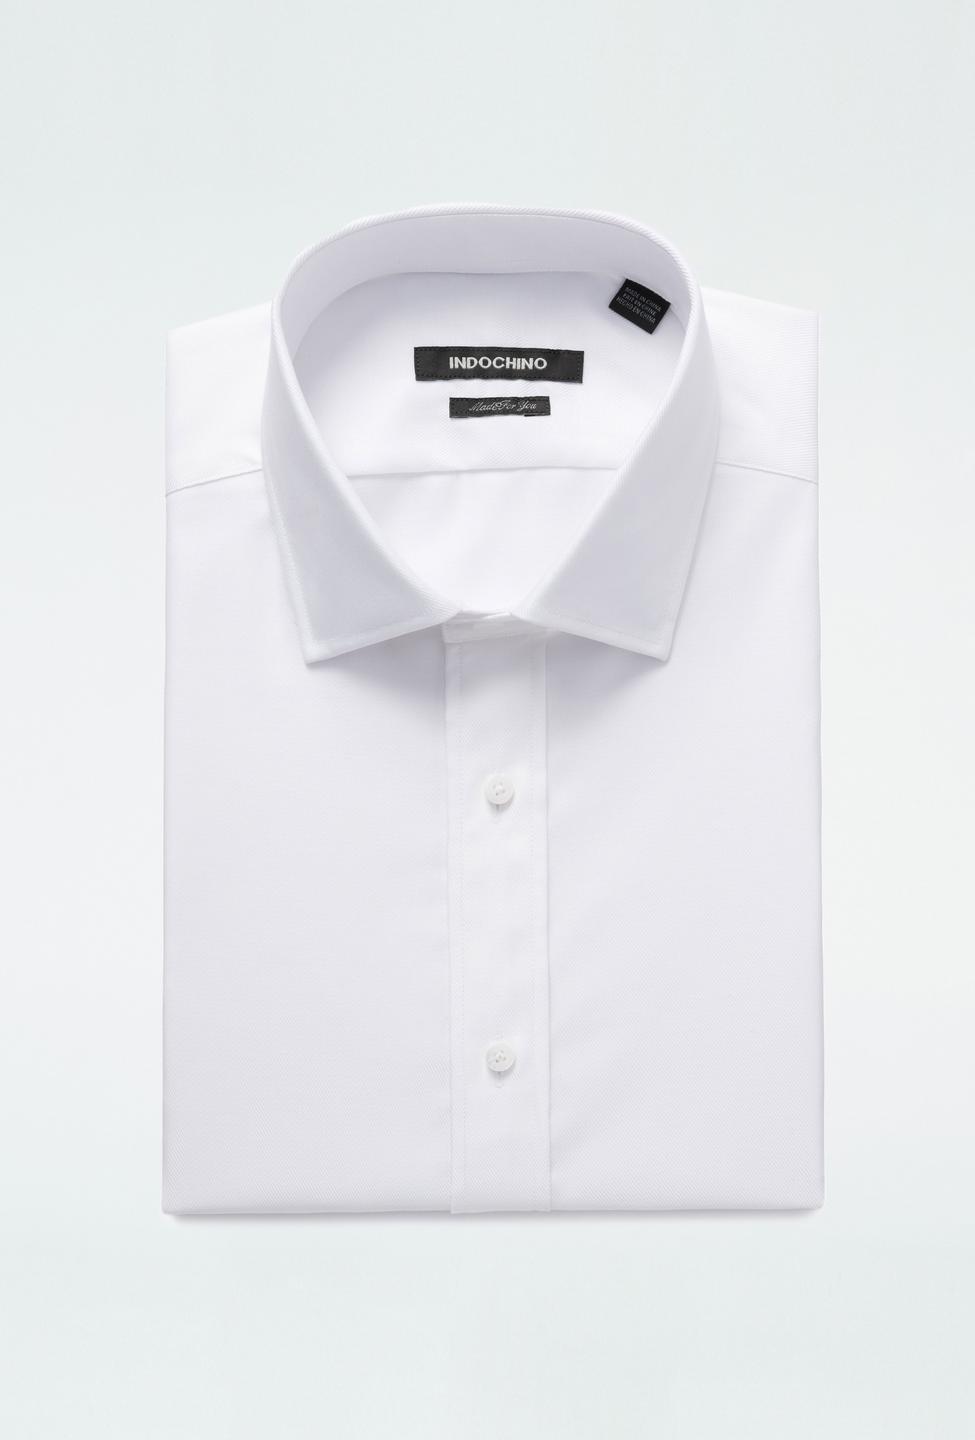 Halewood White Shirt